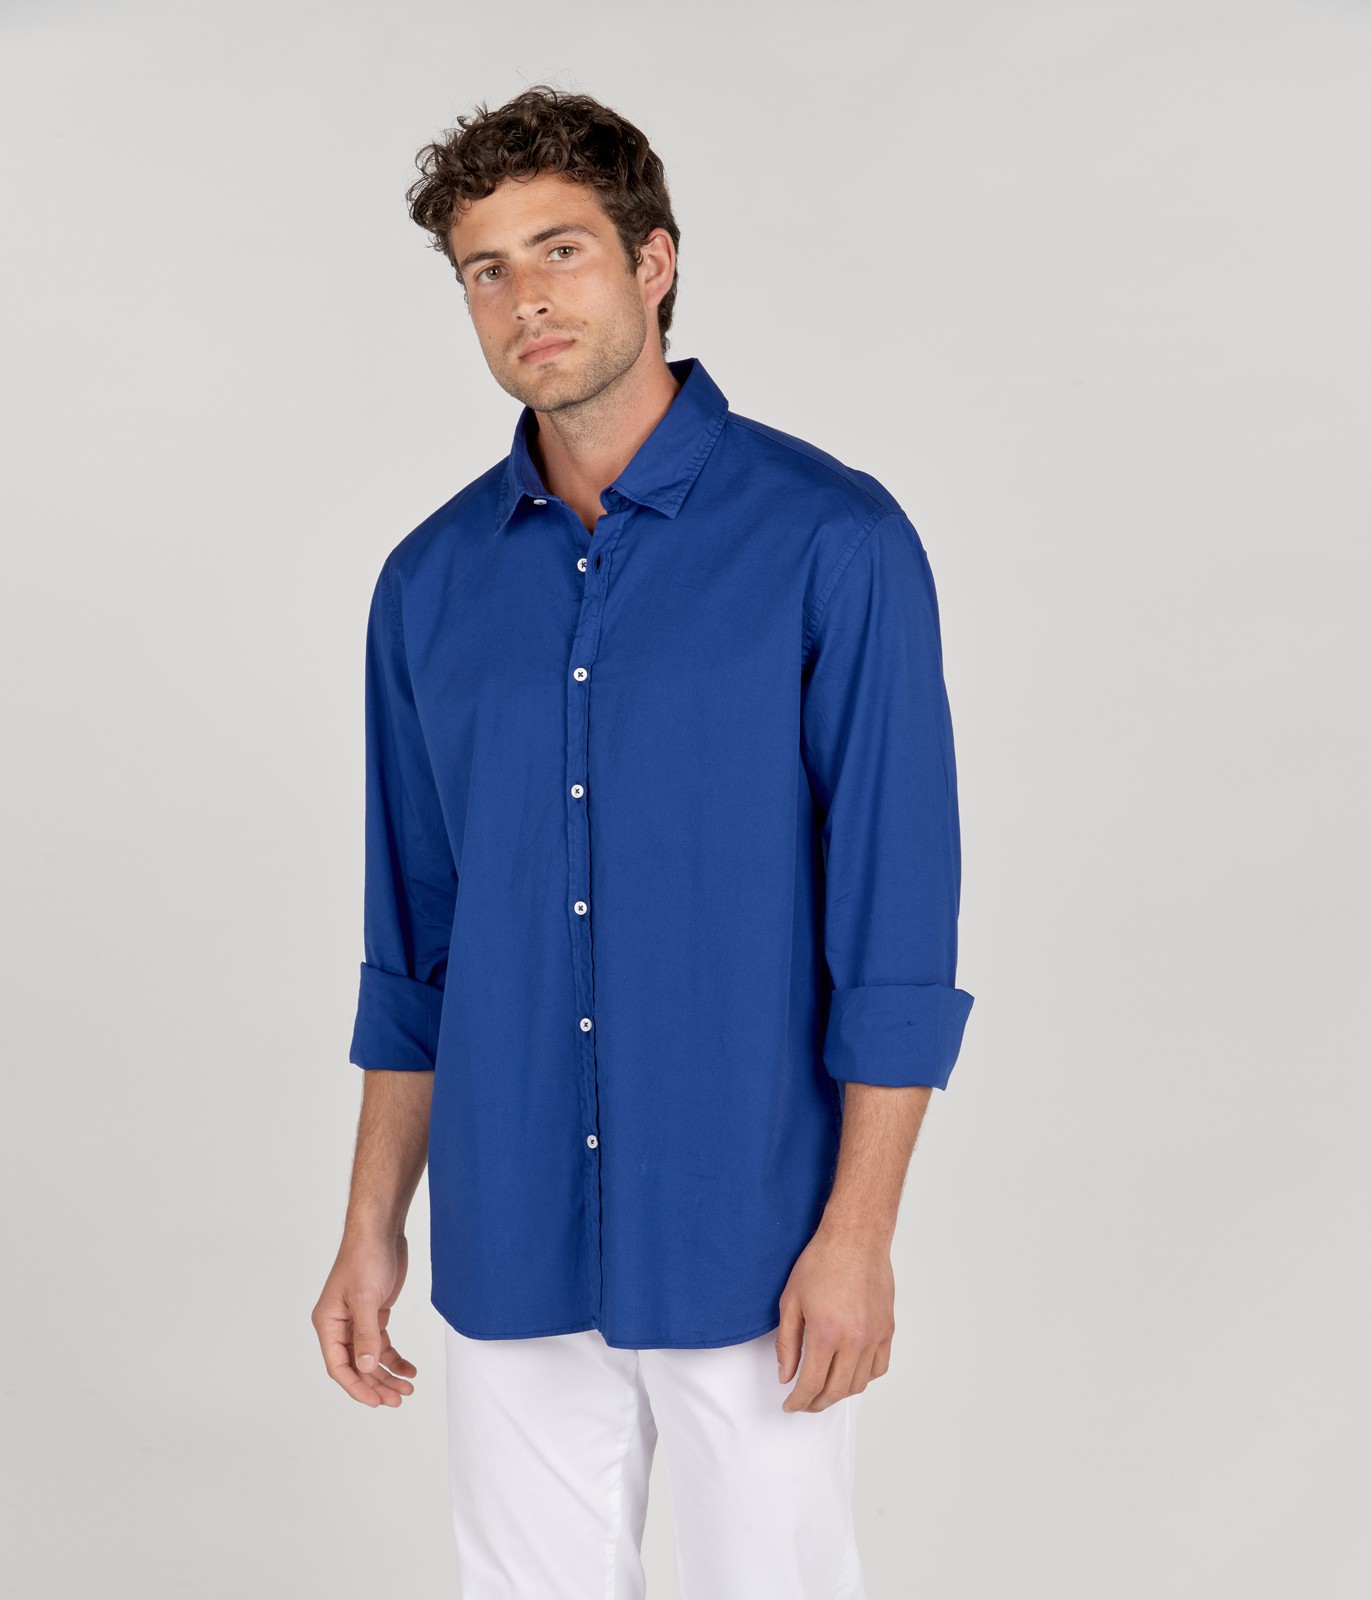 Plain indigo color long sleeves Quality for Europann shirt men brand